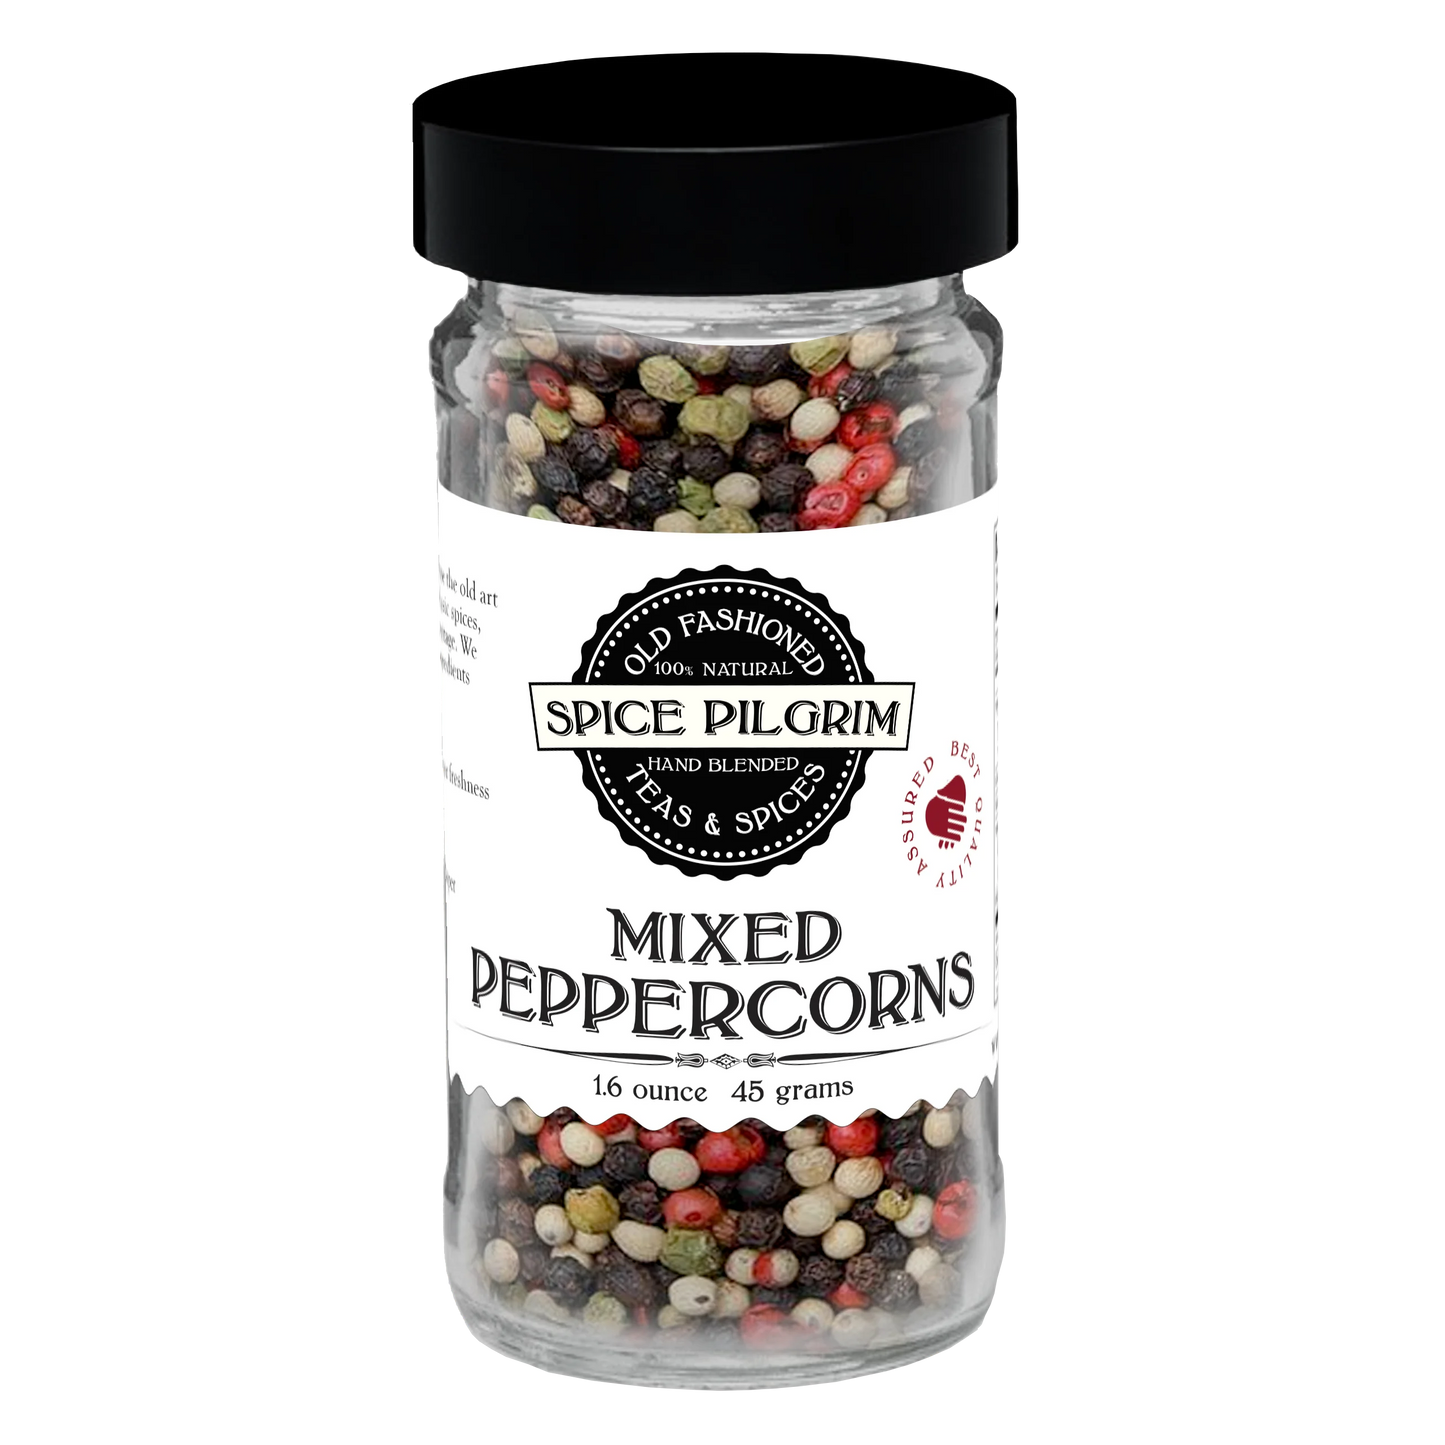 Mixed Peppercorns